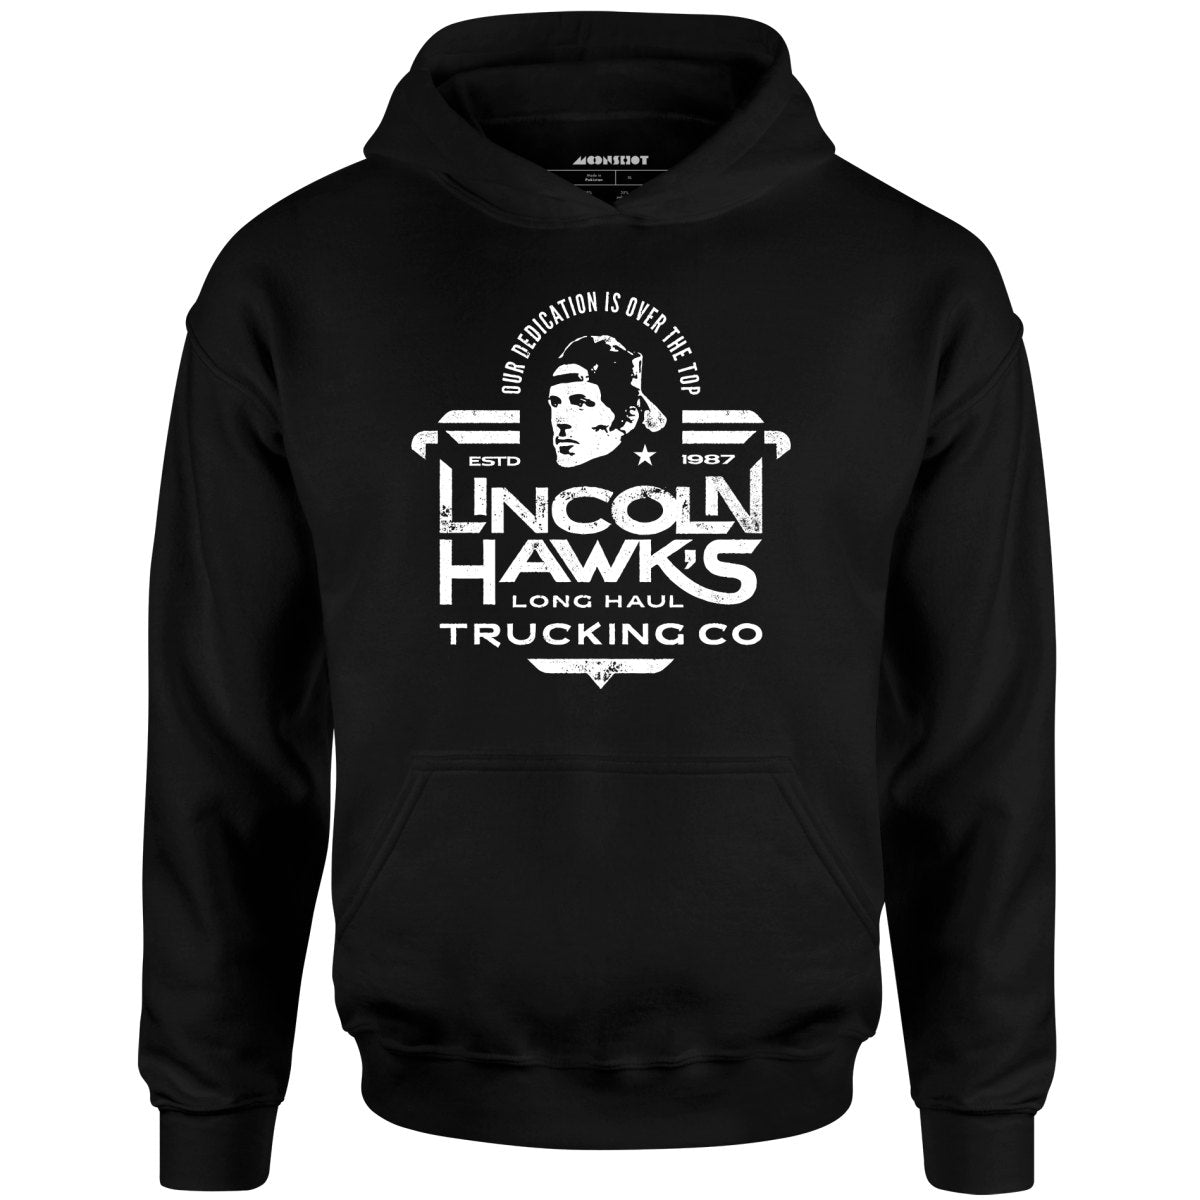 Lincoln Hawk's Trucking Co. - Unisex Hoodie